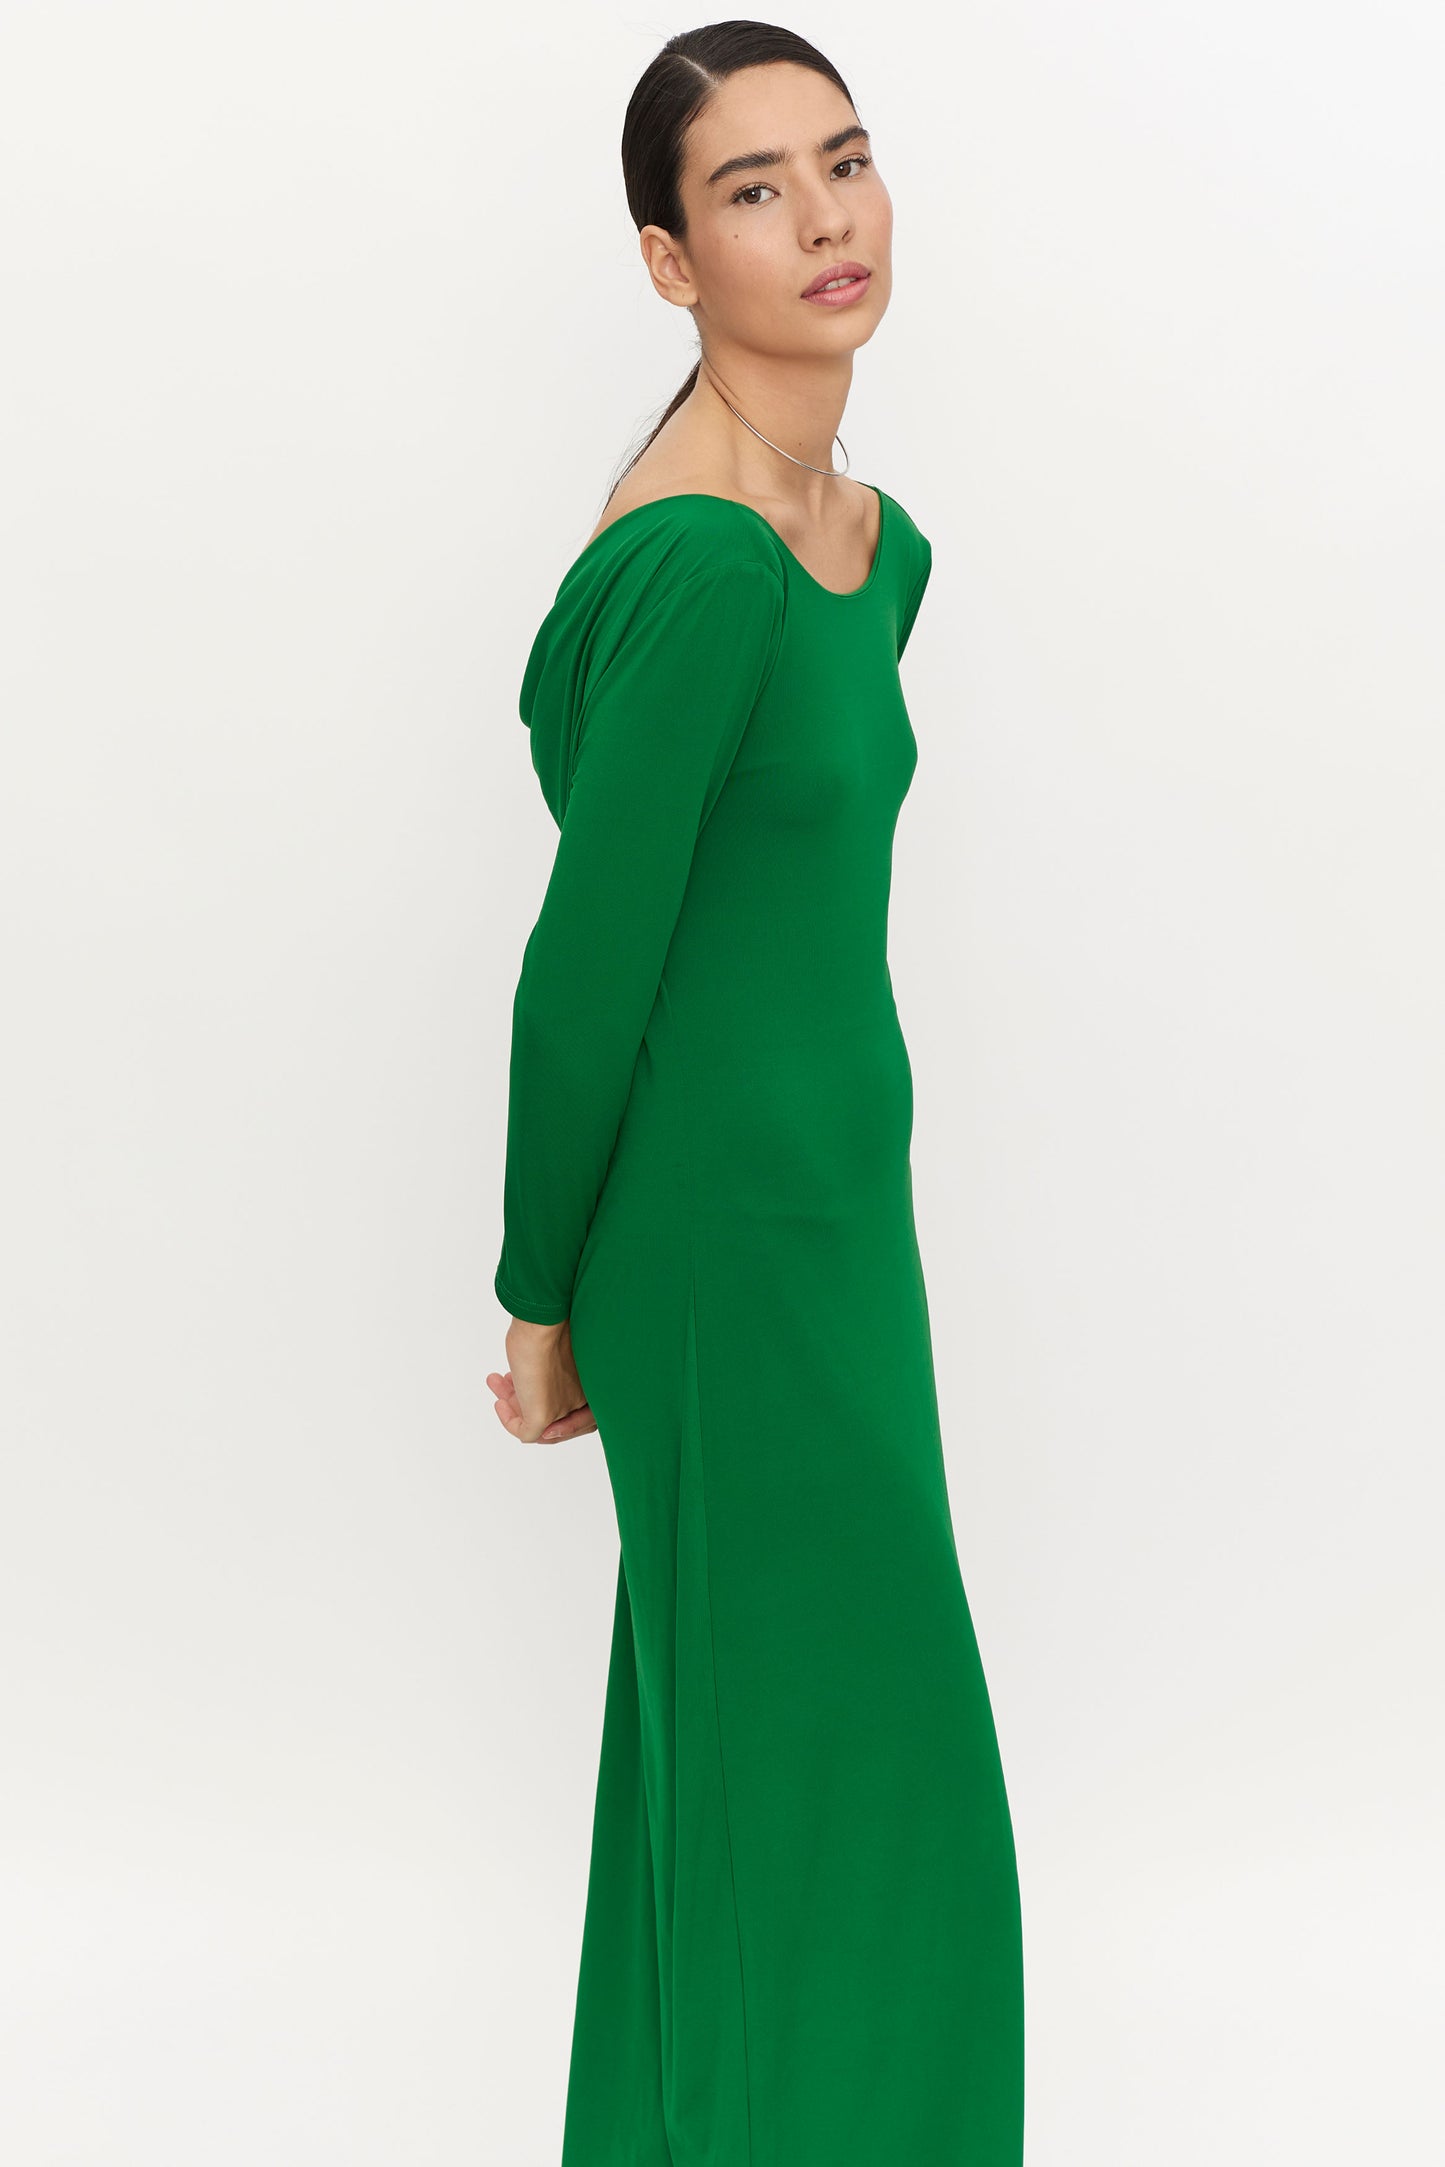 Long green back neckline dress